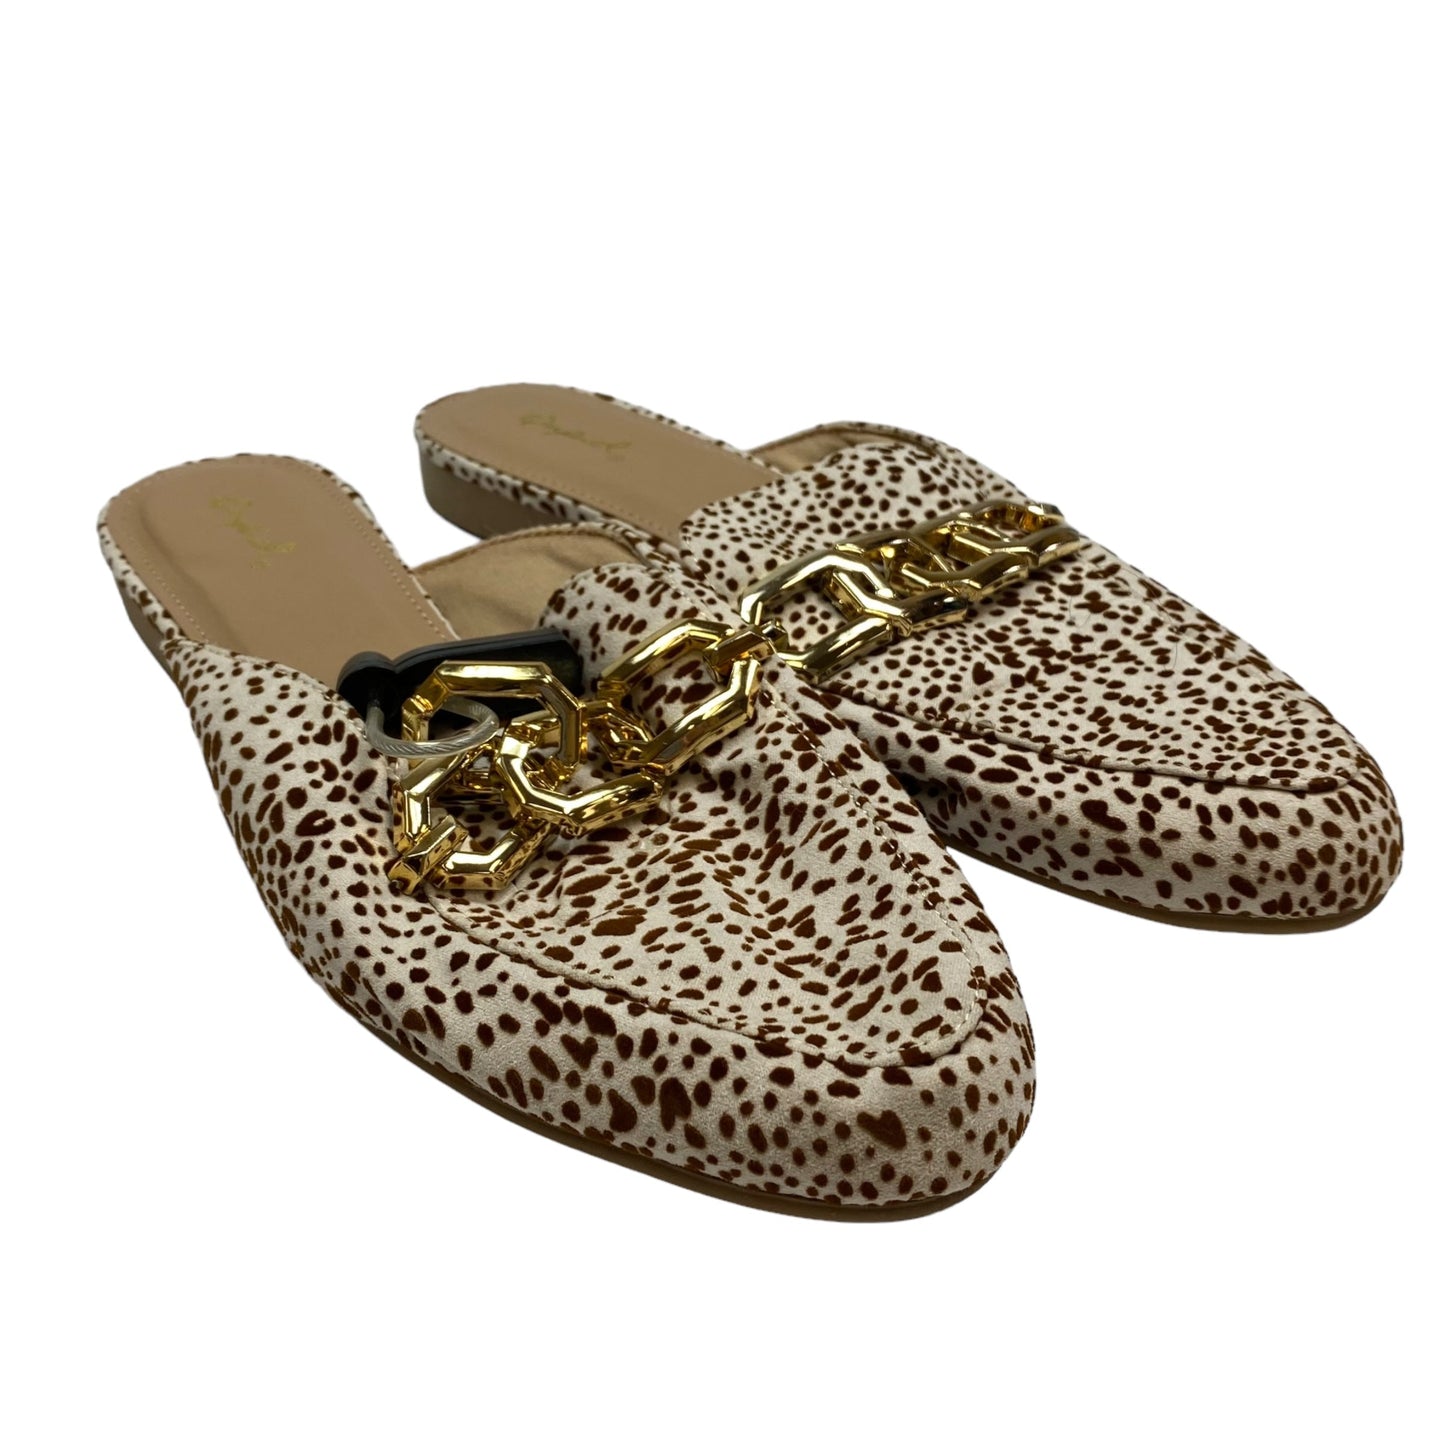 Animal Print Shoes Flats Qupid, Size 9